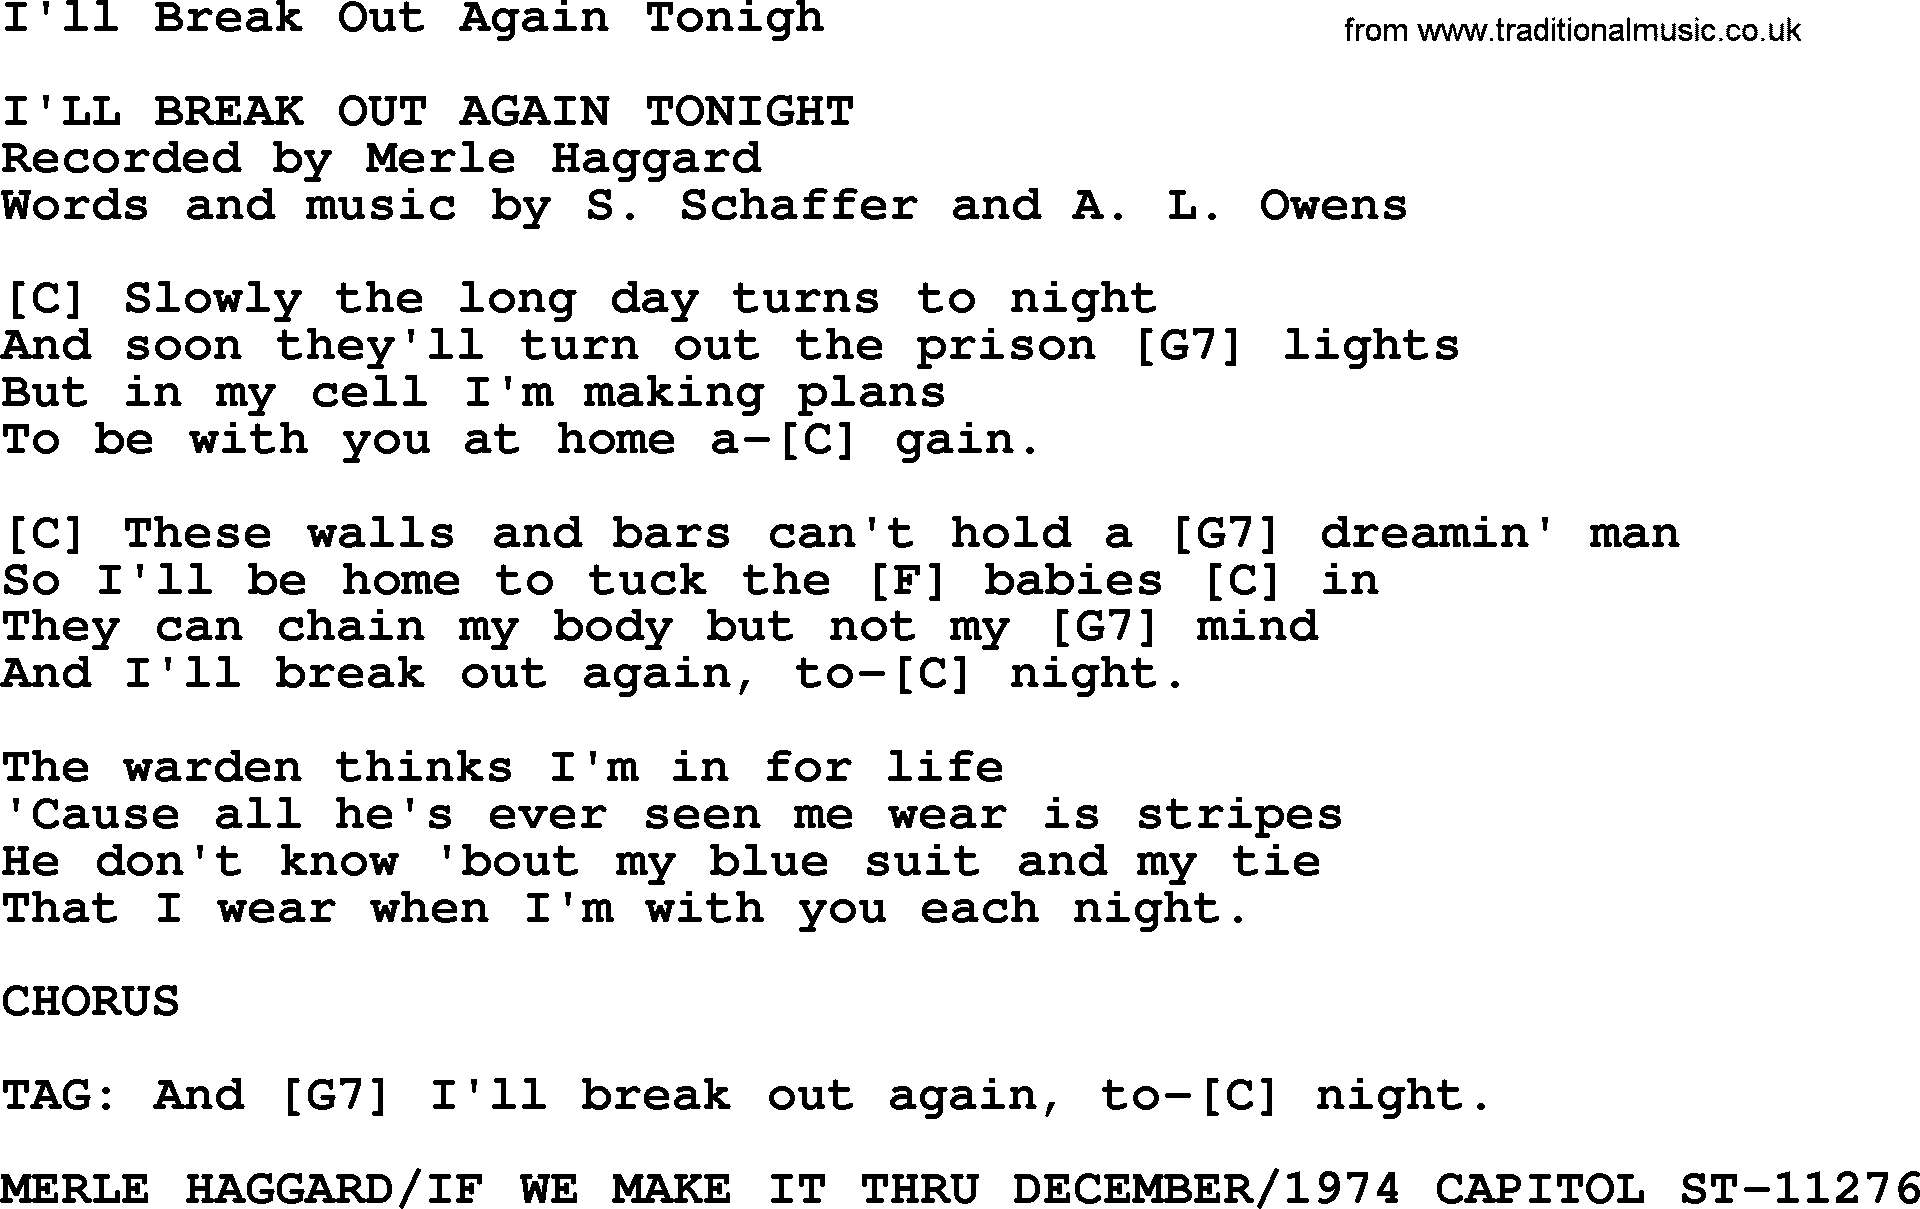 Merle Haggard song: I'll Break Out Again Tonigh, lyrics and chords